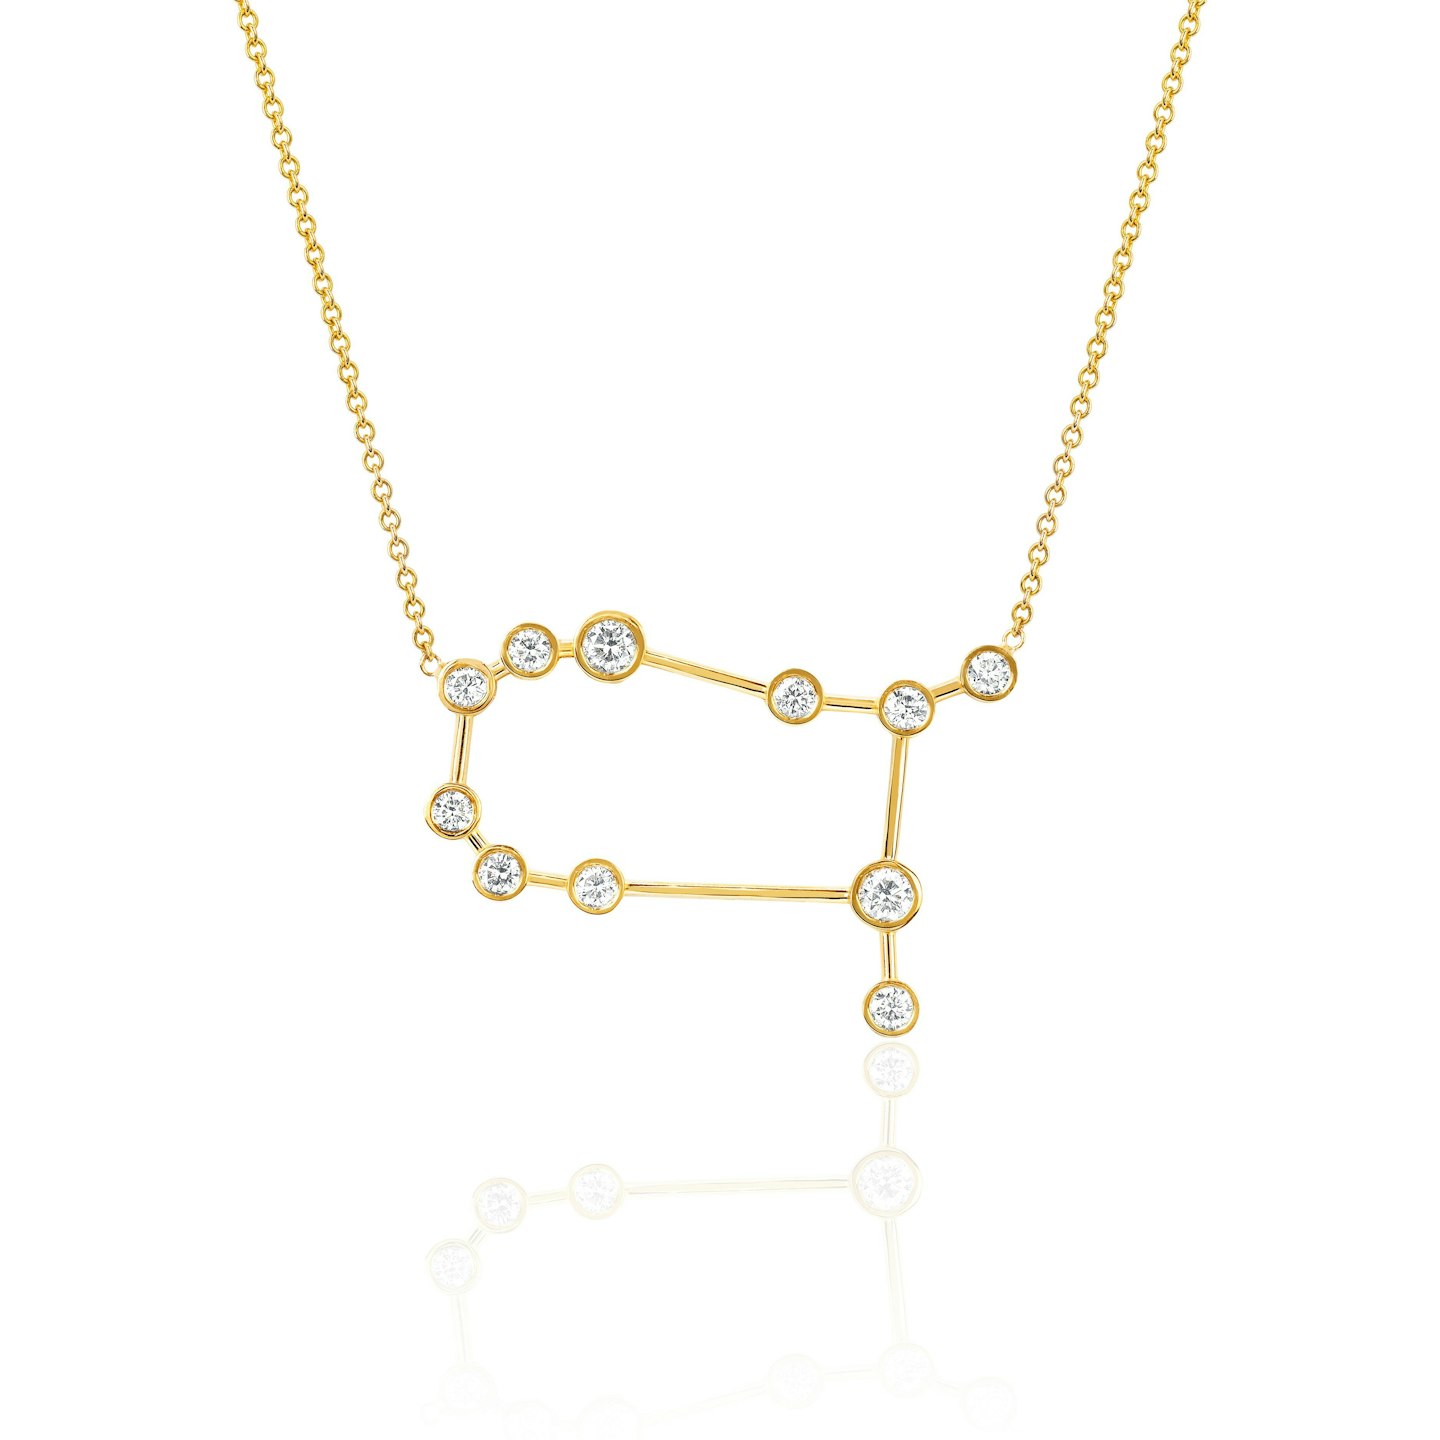 Logan Hollowell, Gemini Constellation Necklace, £1,285